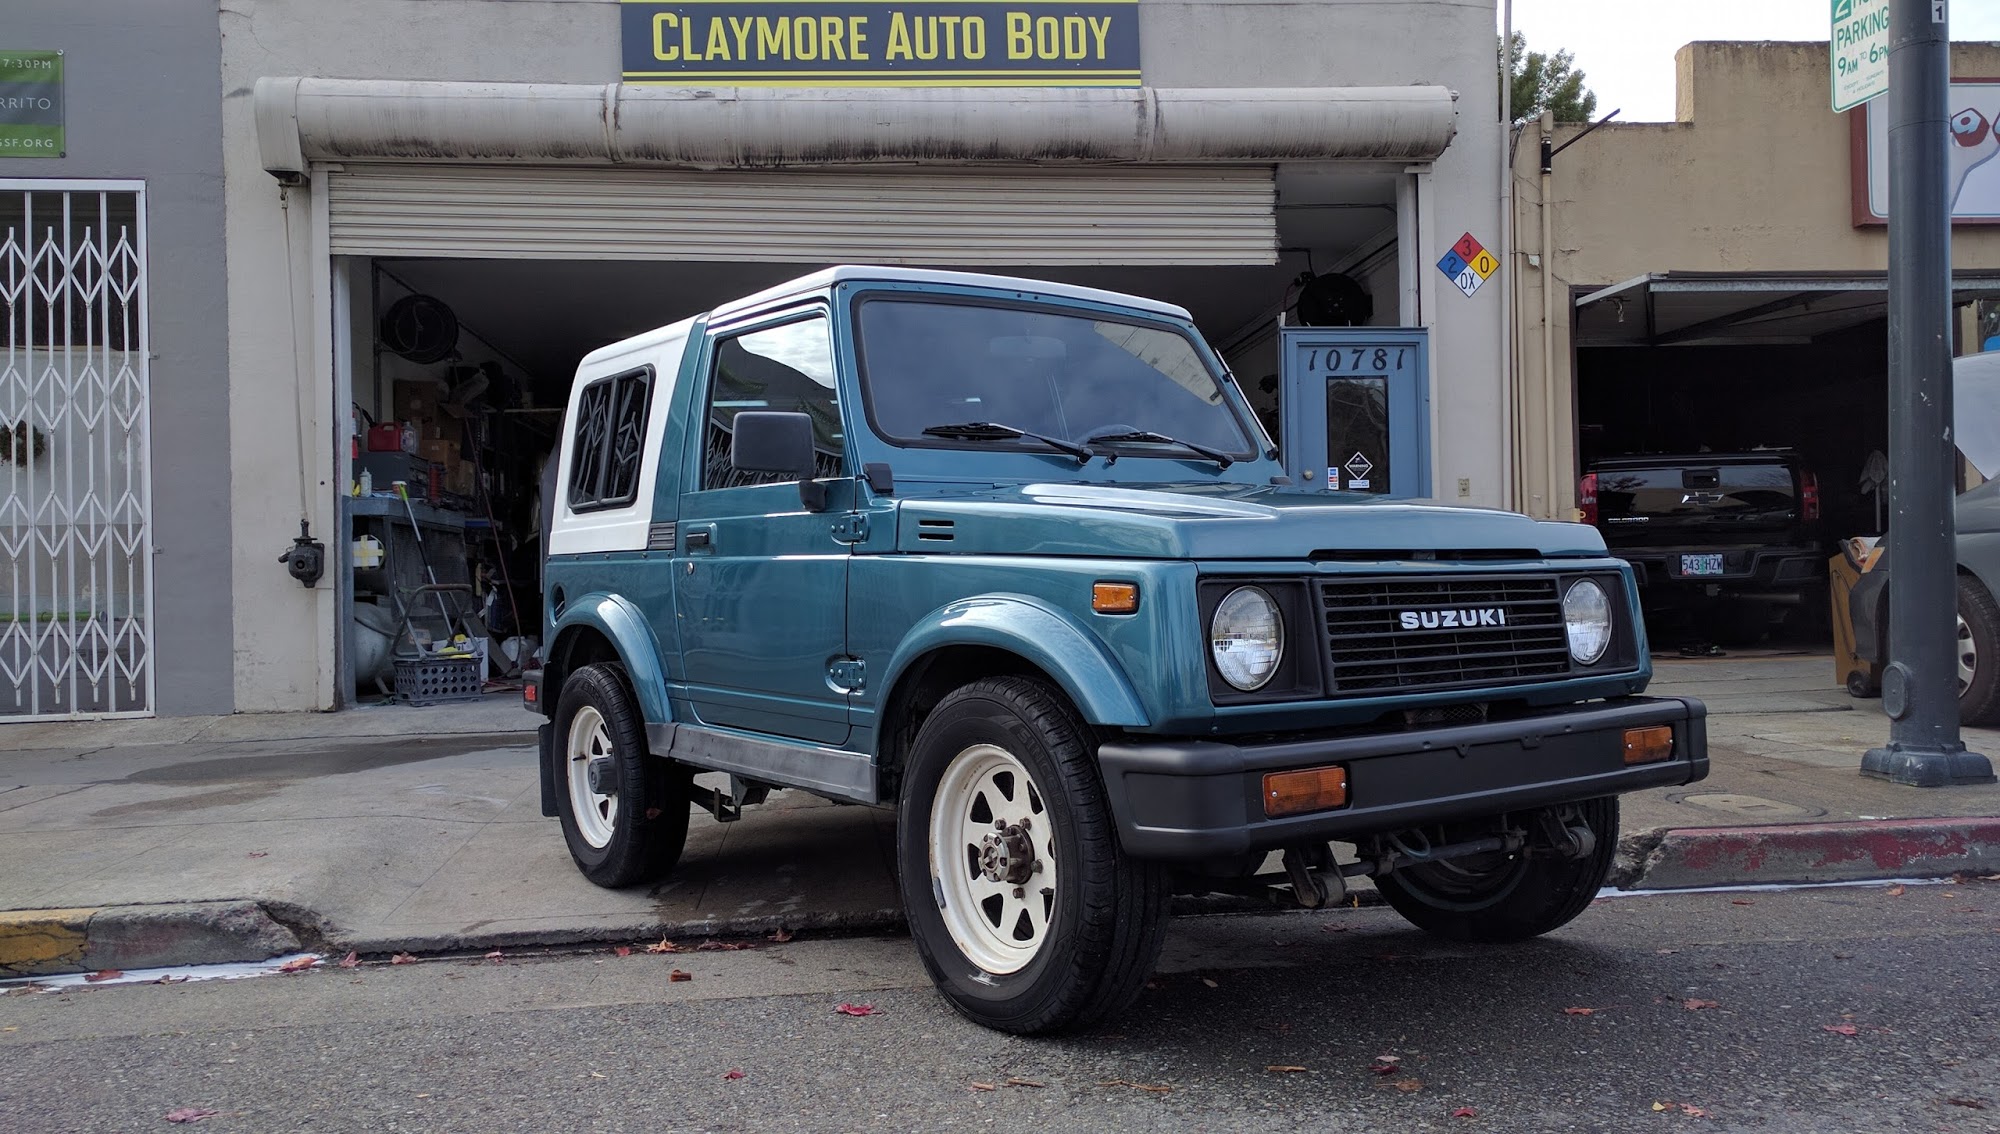 Claymore Auto Body & Repair